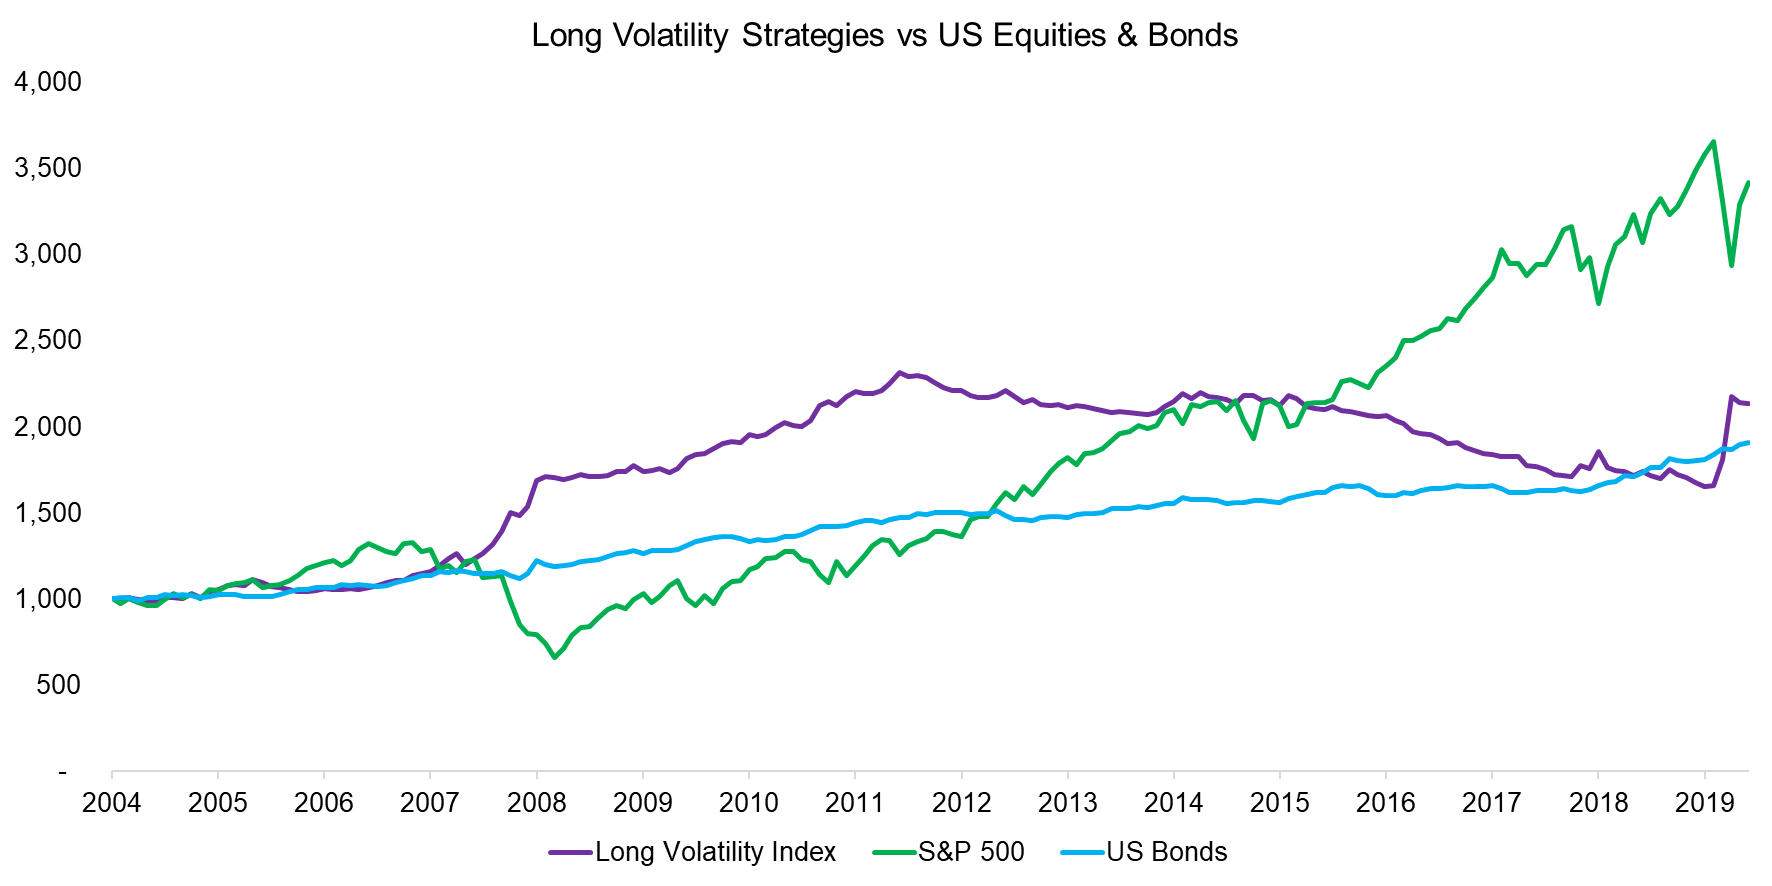 Long Volatility Strategies vs US Equities & Bonds